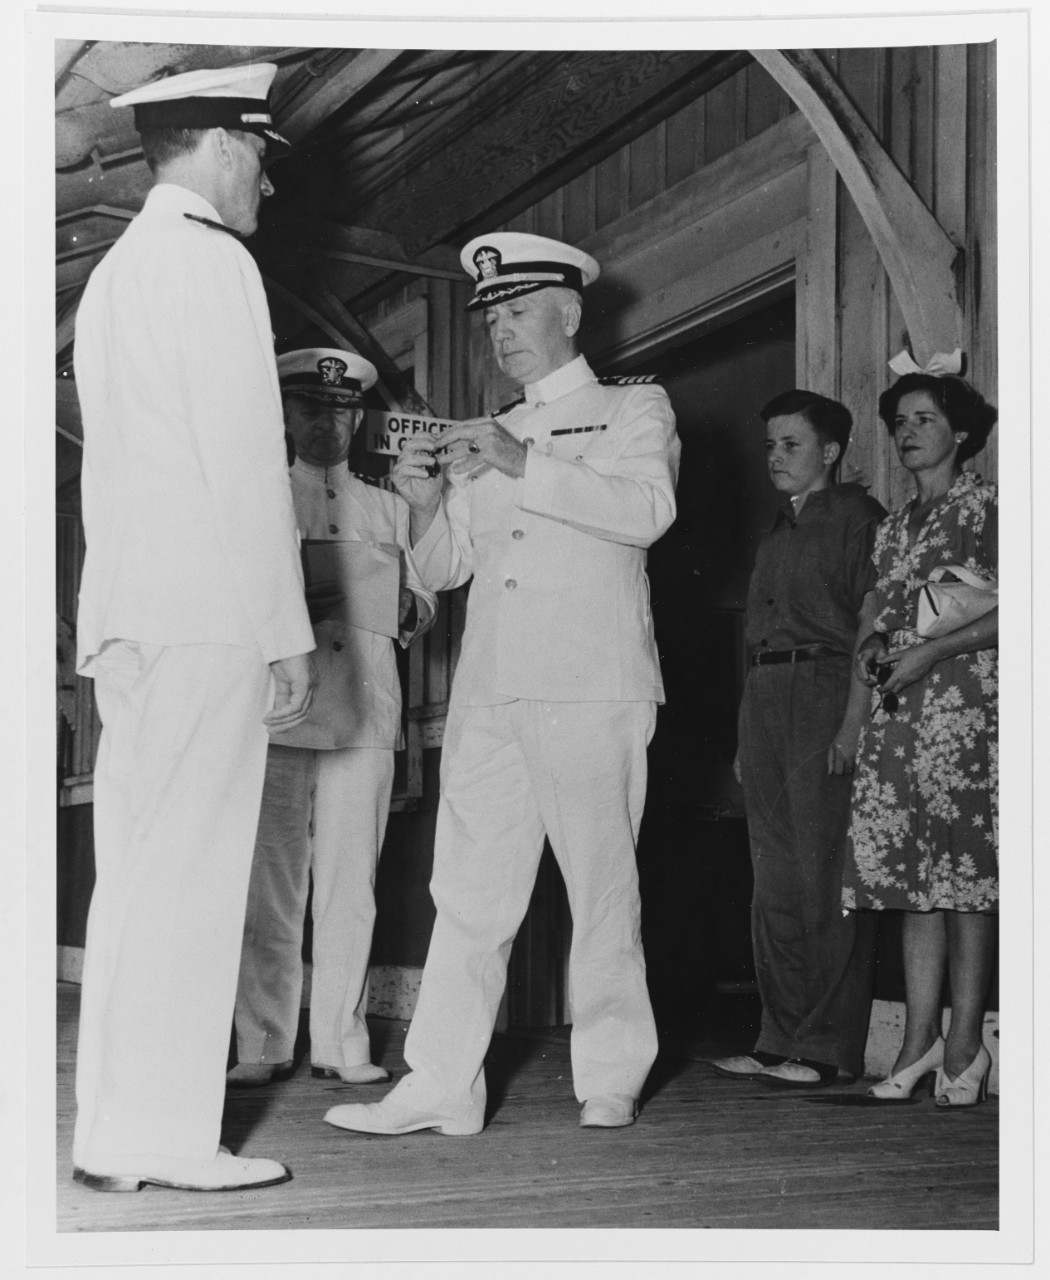 80-G-10176 Captain S. C. Norton, USN, awarded the Navy Cross